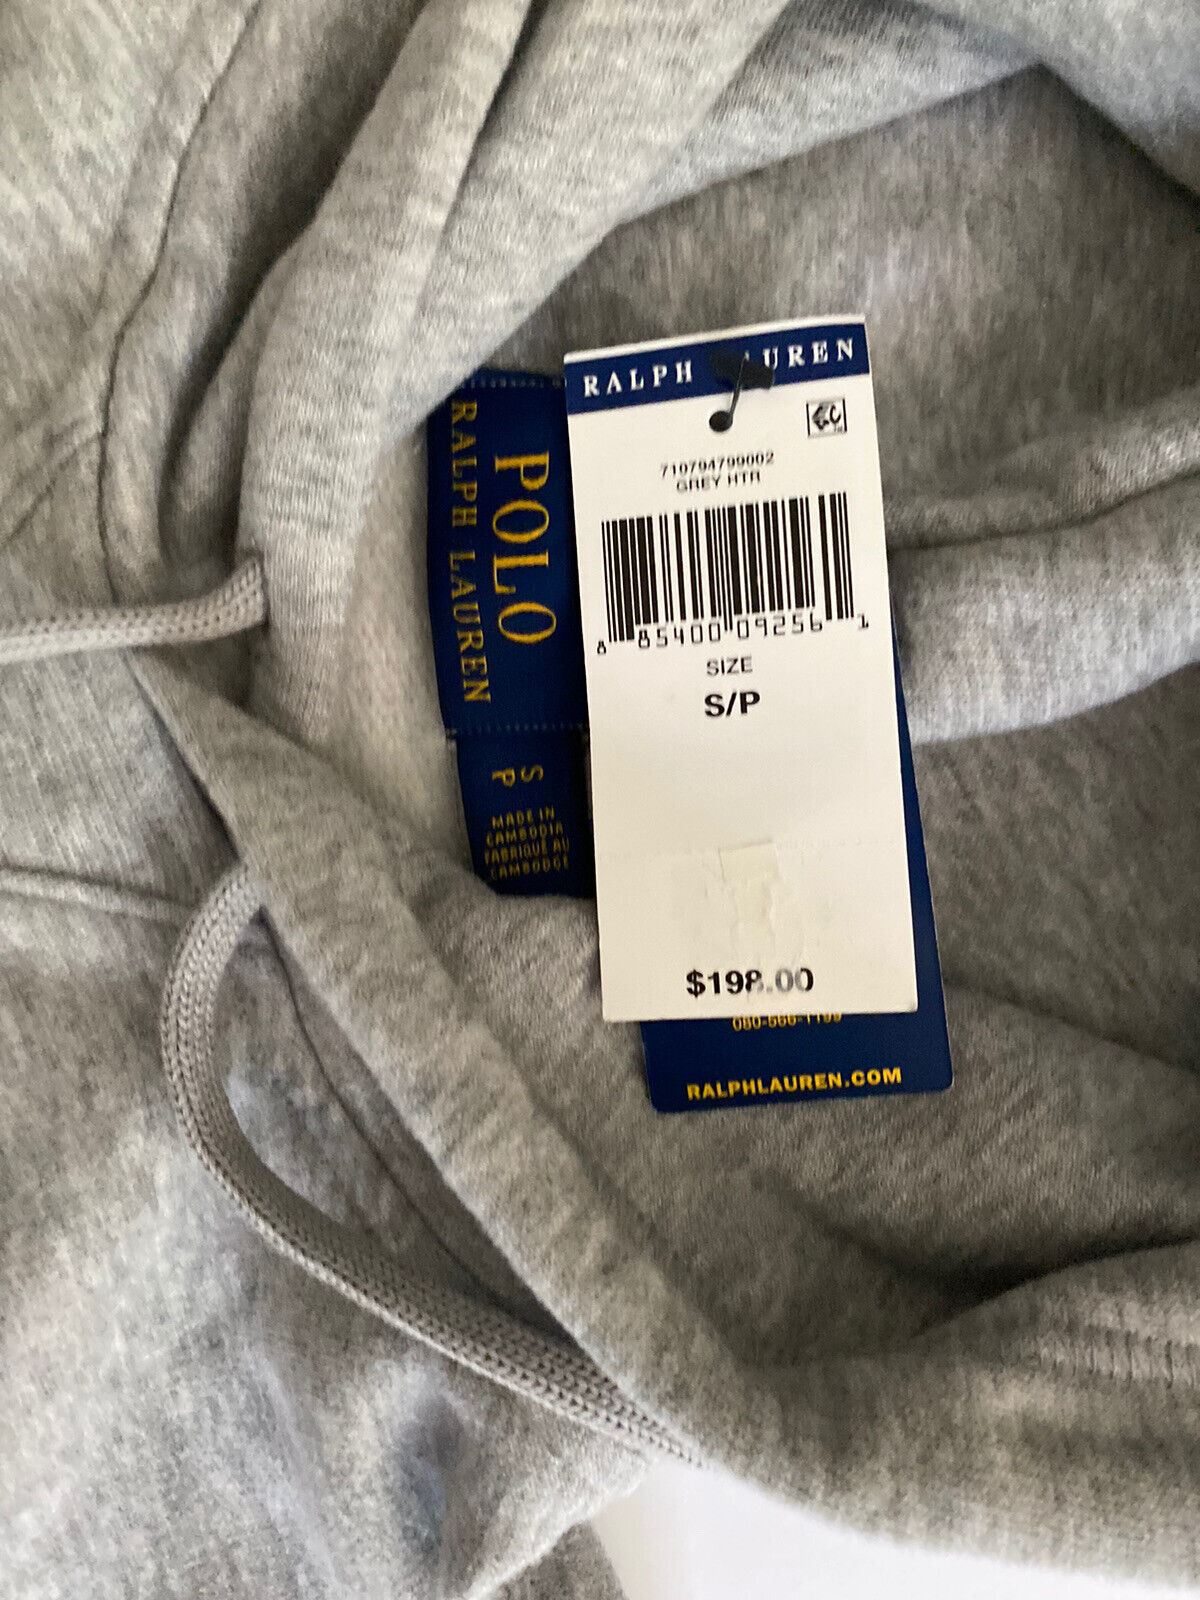 Neu mit Etikett: 198 $ Polo Ralph Lauren USA Logo Langarm-Fleece-Kapuzenpullover, Grau, Größe S 